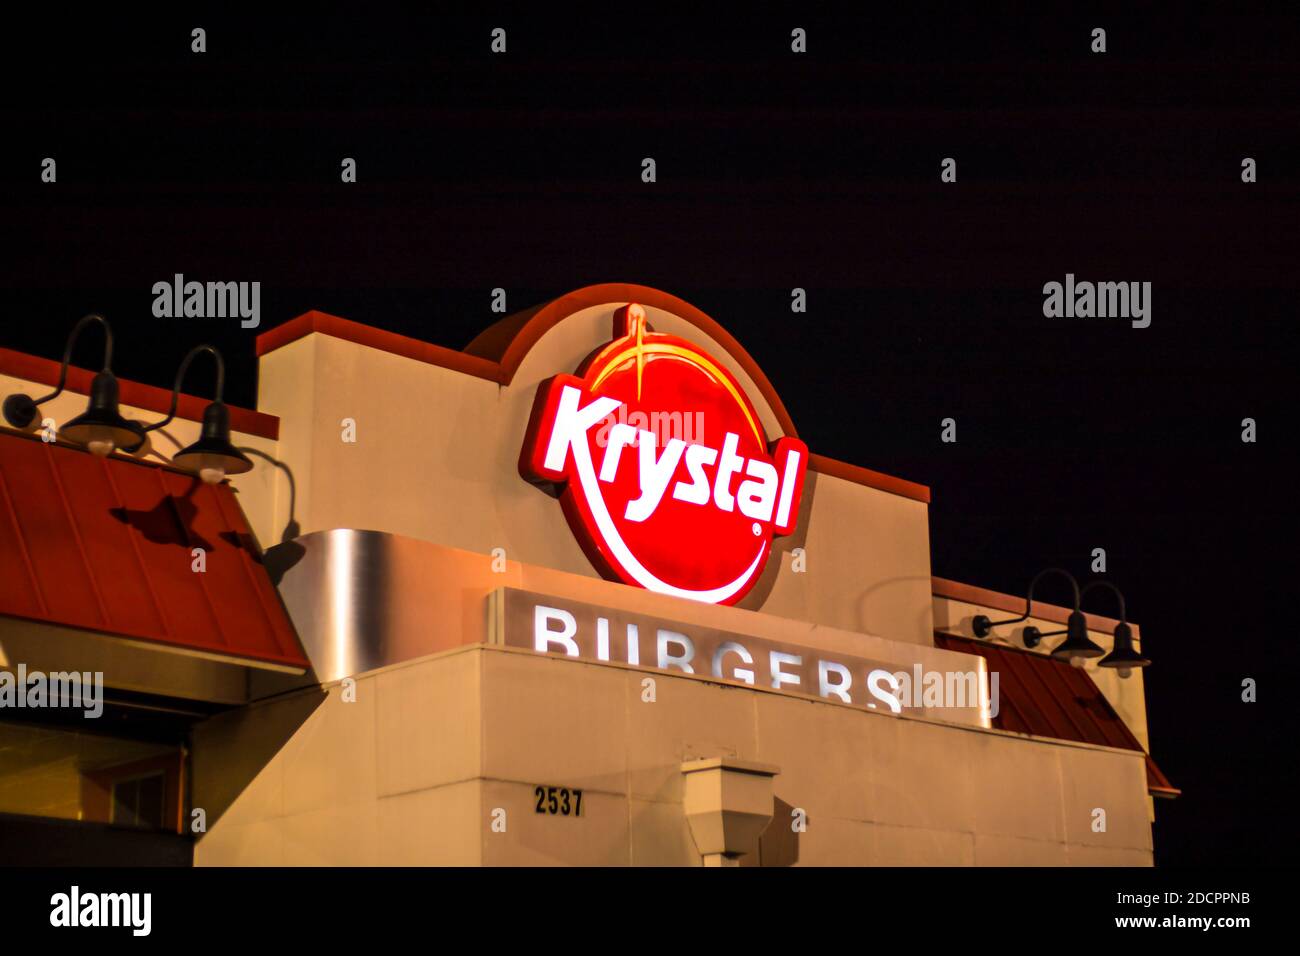 Augusta, Ga / USA - 11 20 20: Krystal Restaurant fast food building sign at night Stock Photo